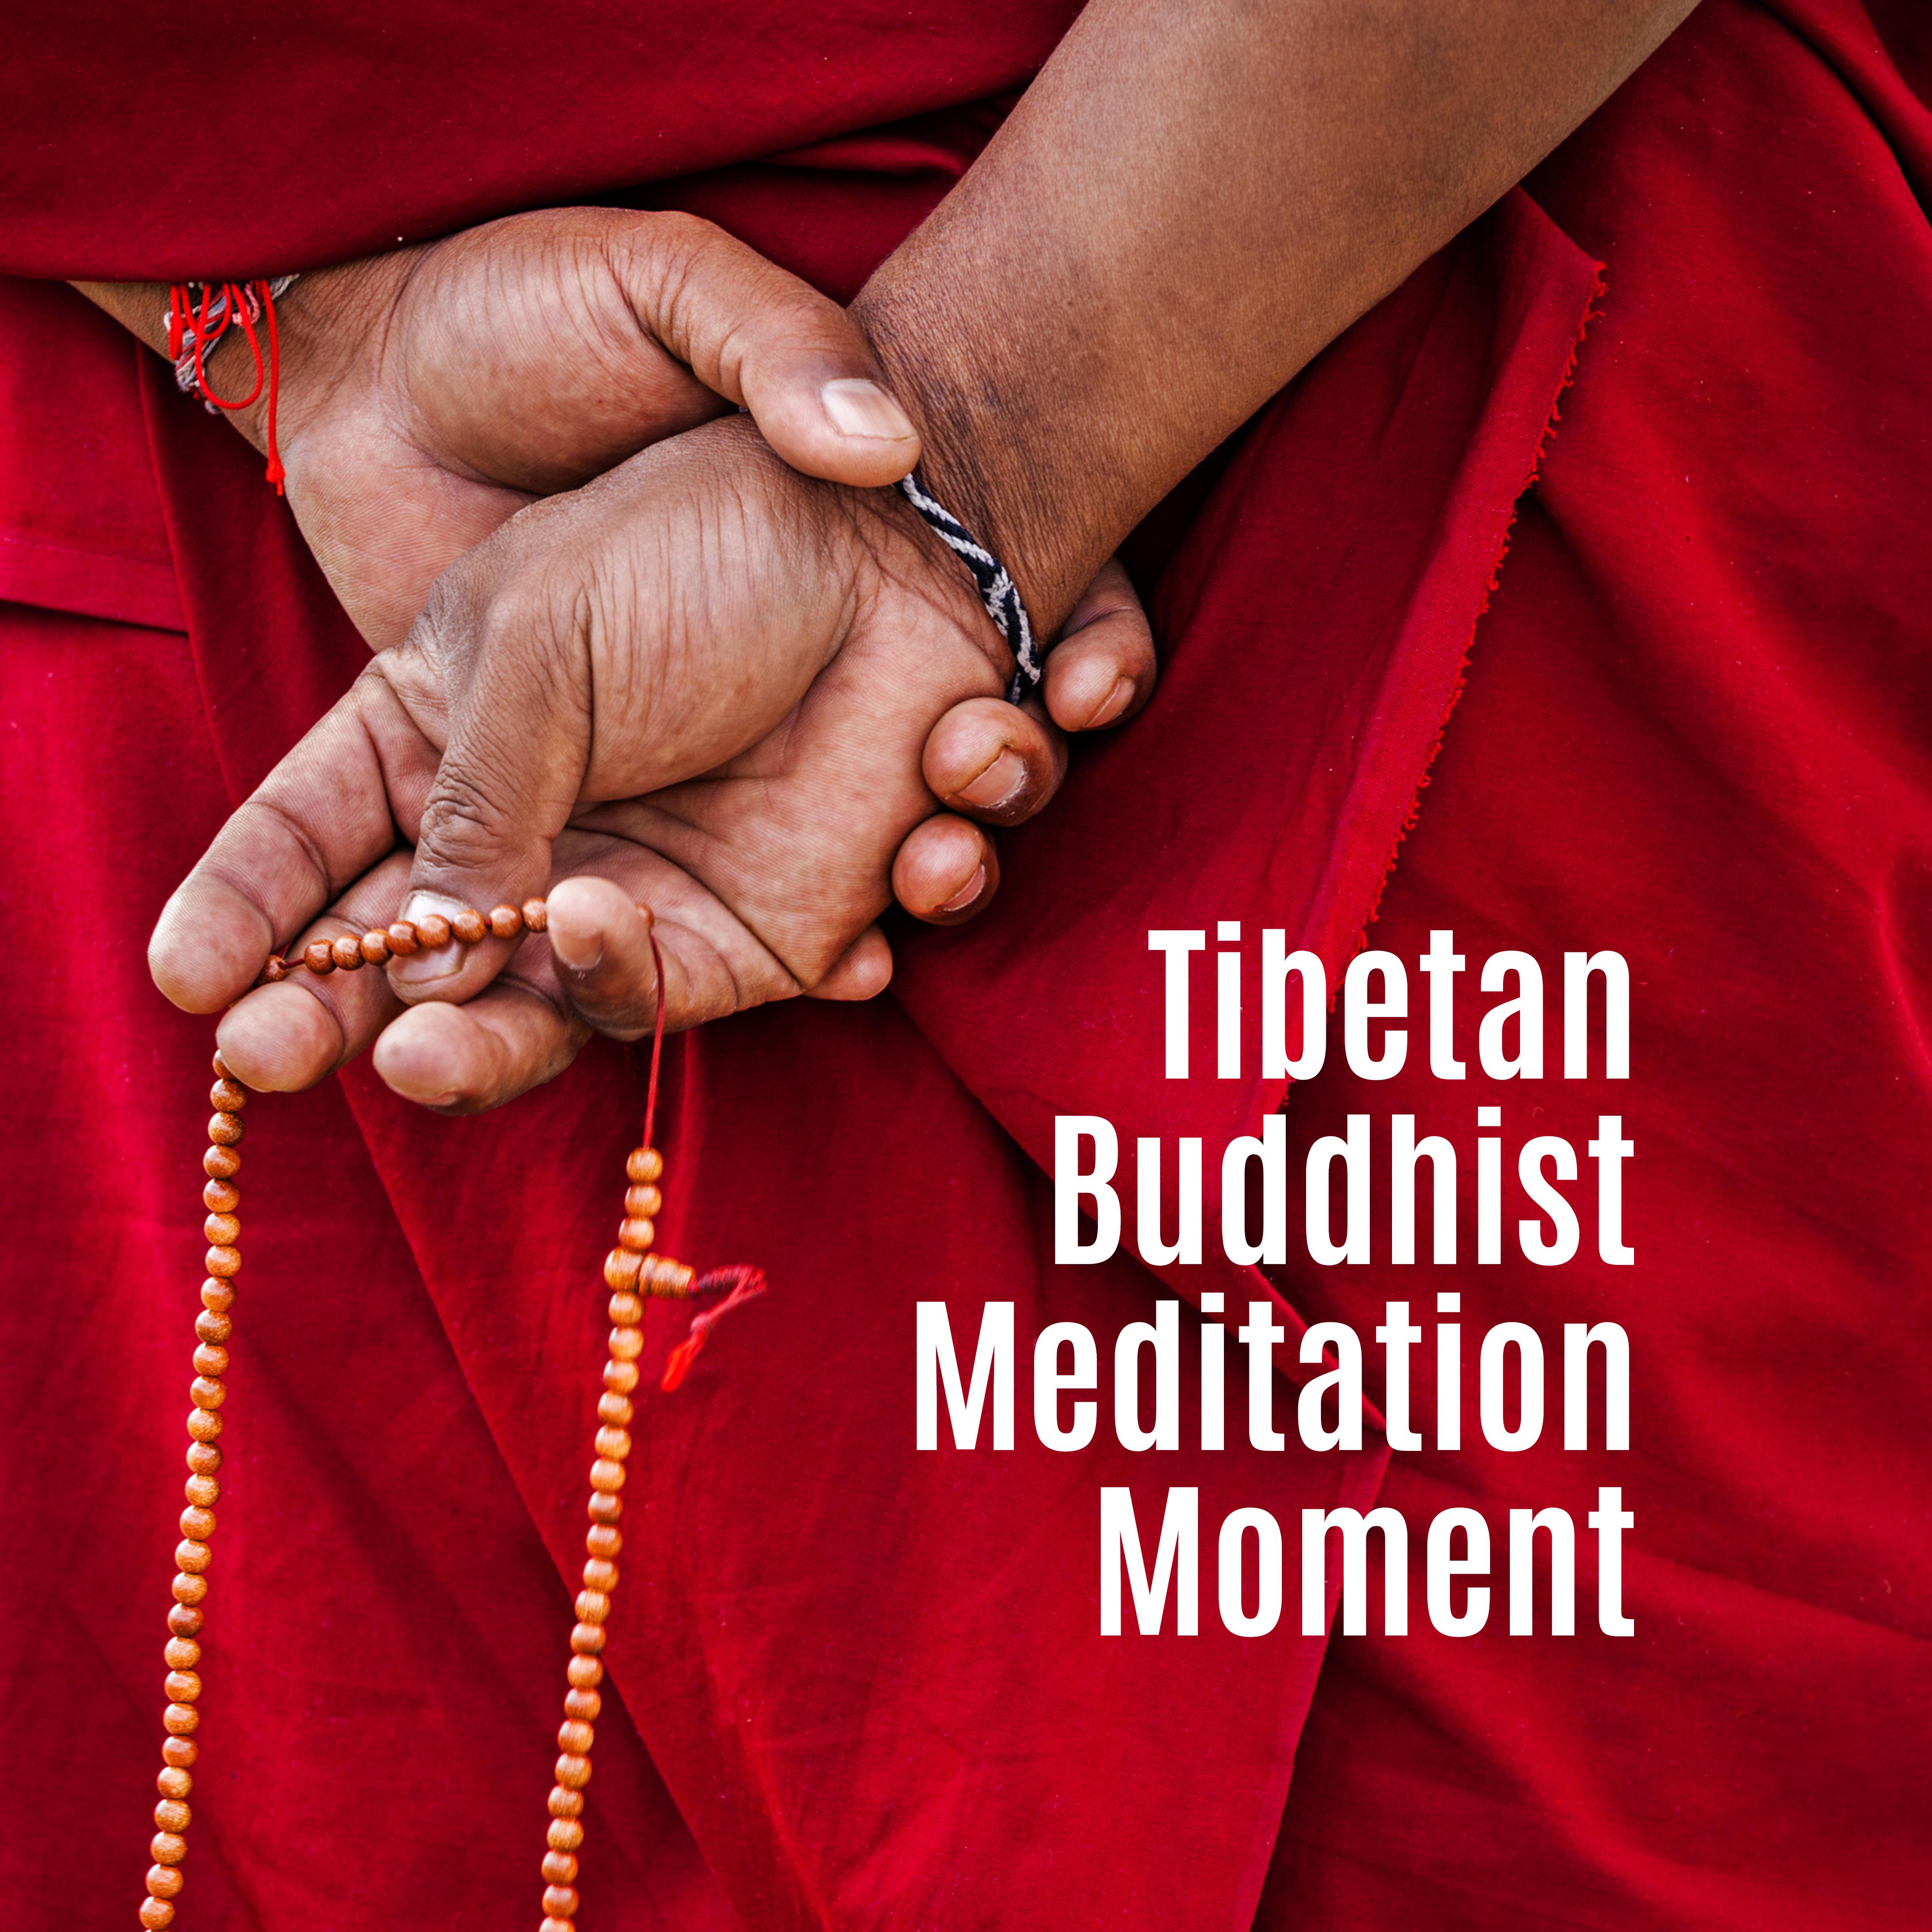 Tibetan Buddhist Meditation Moment: 2019 New Age Music Mix for Deep Yoga Contemplation & Relaxation